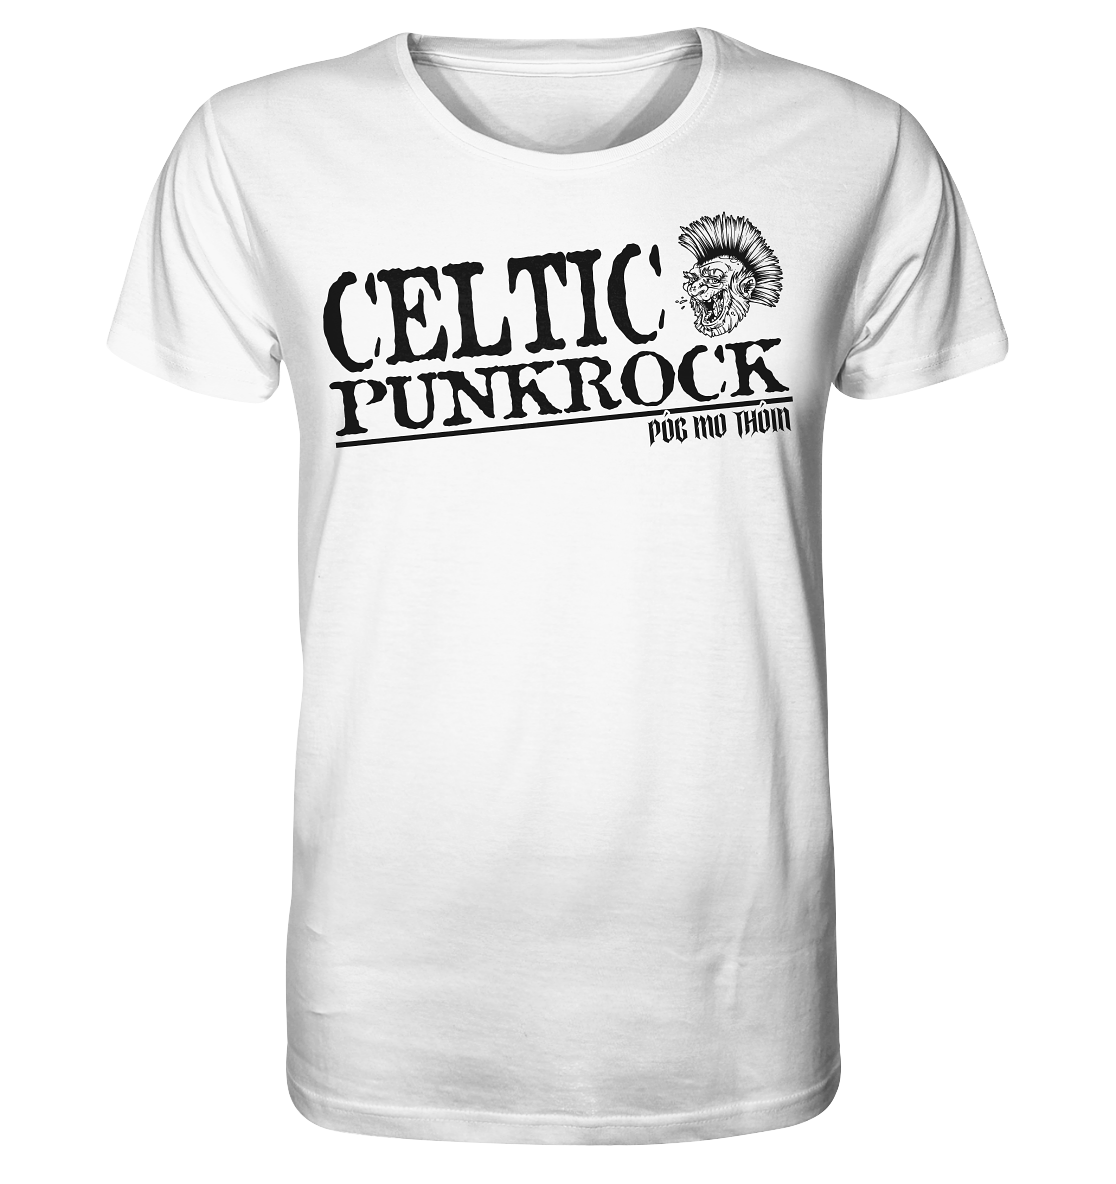 Póg Mo Thóin Streetwear "Celtic Punkrock" - Organic Shirt